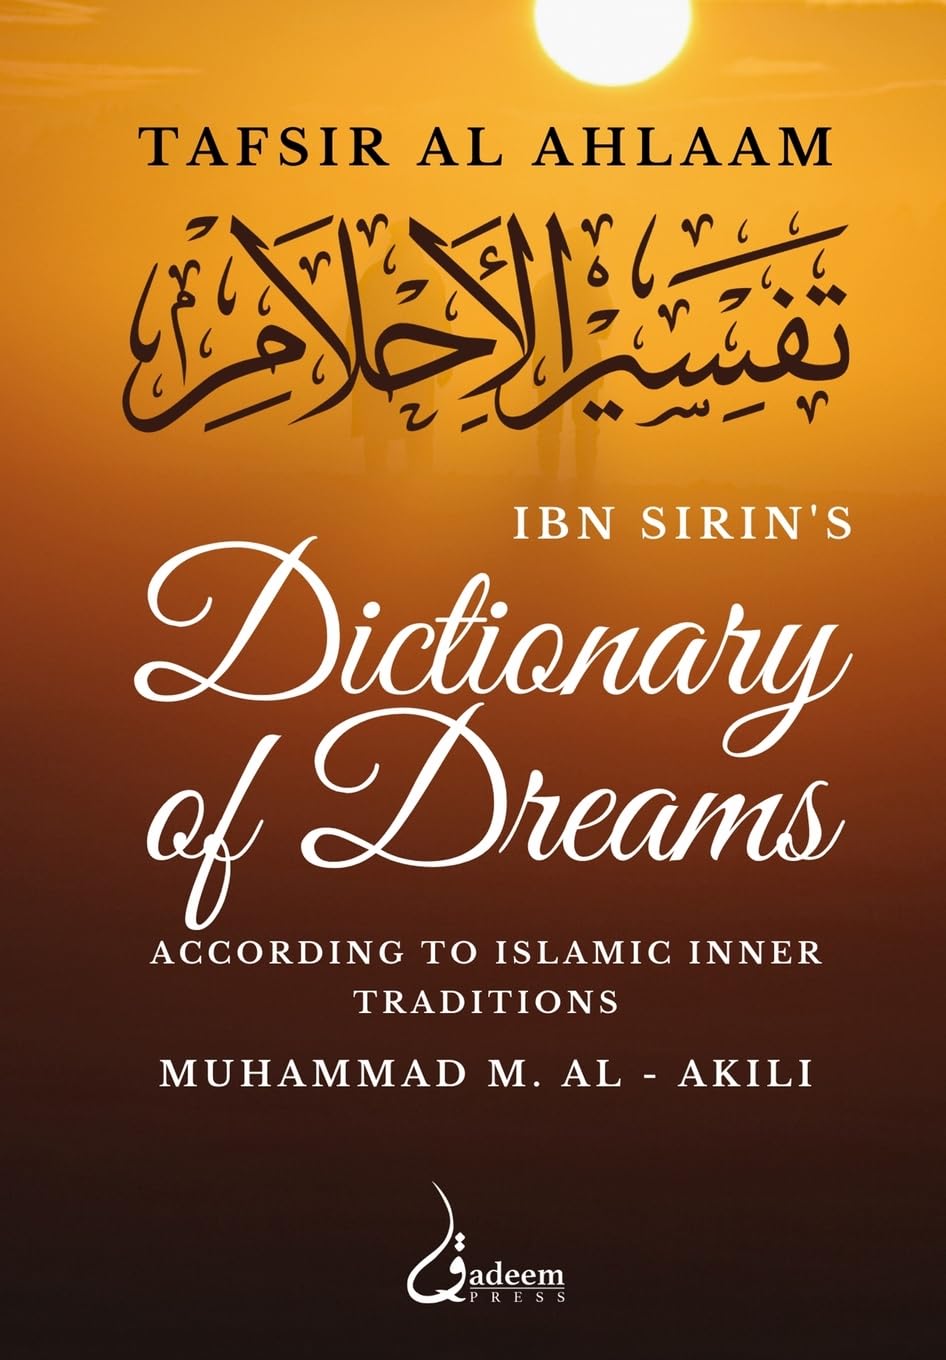 Tafsir Al Ahlaam: Ibn Sirin's Dictionary of Dreams